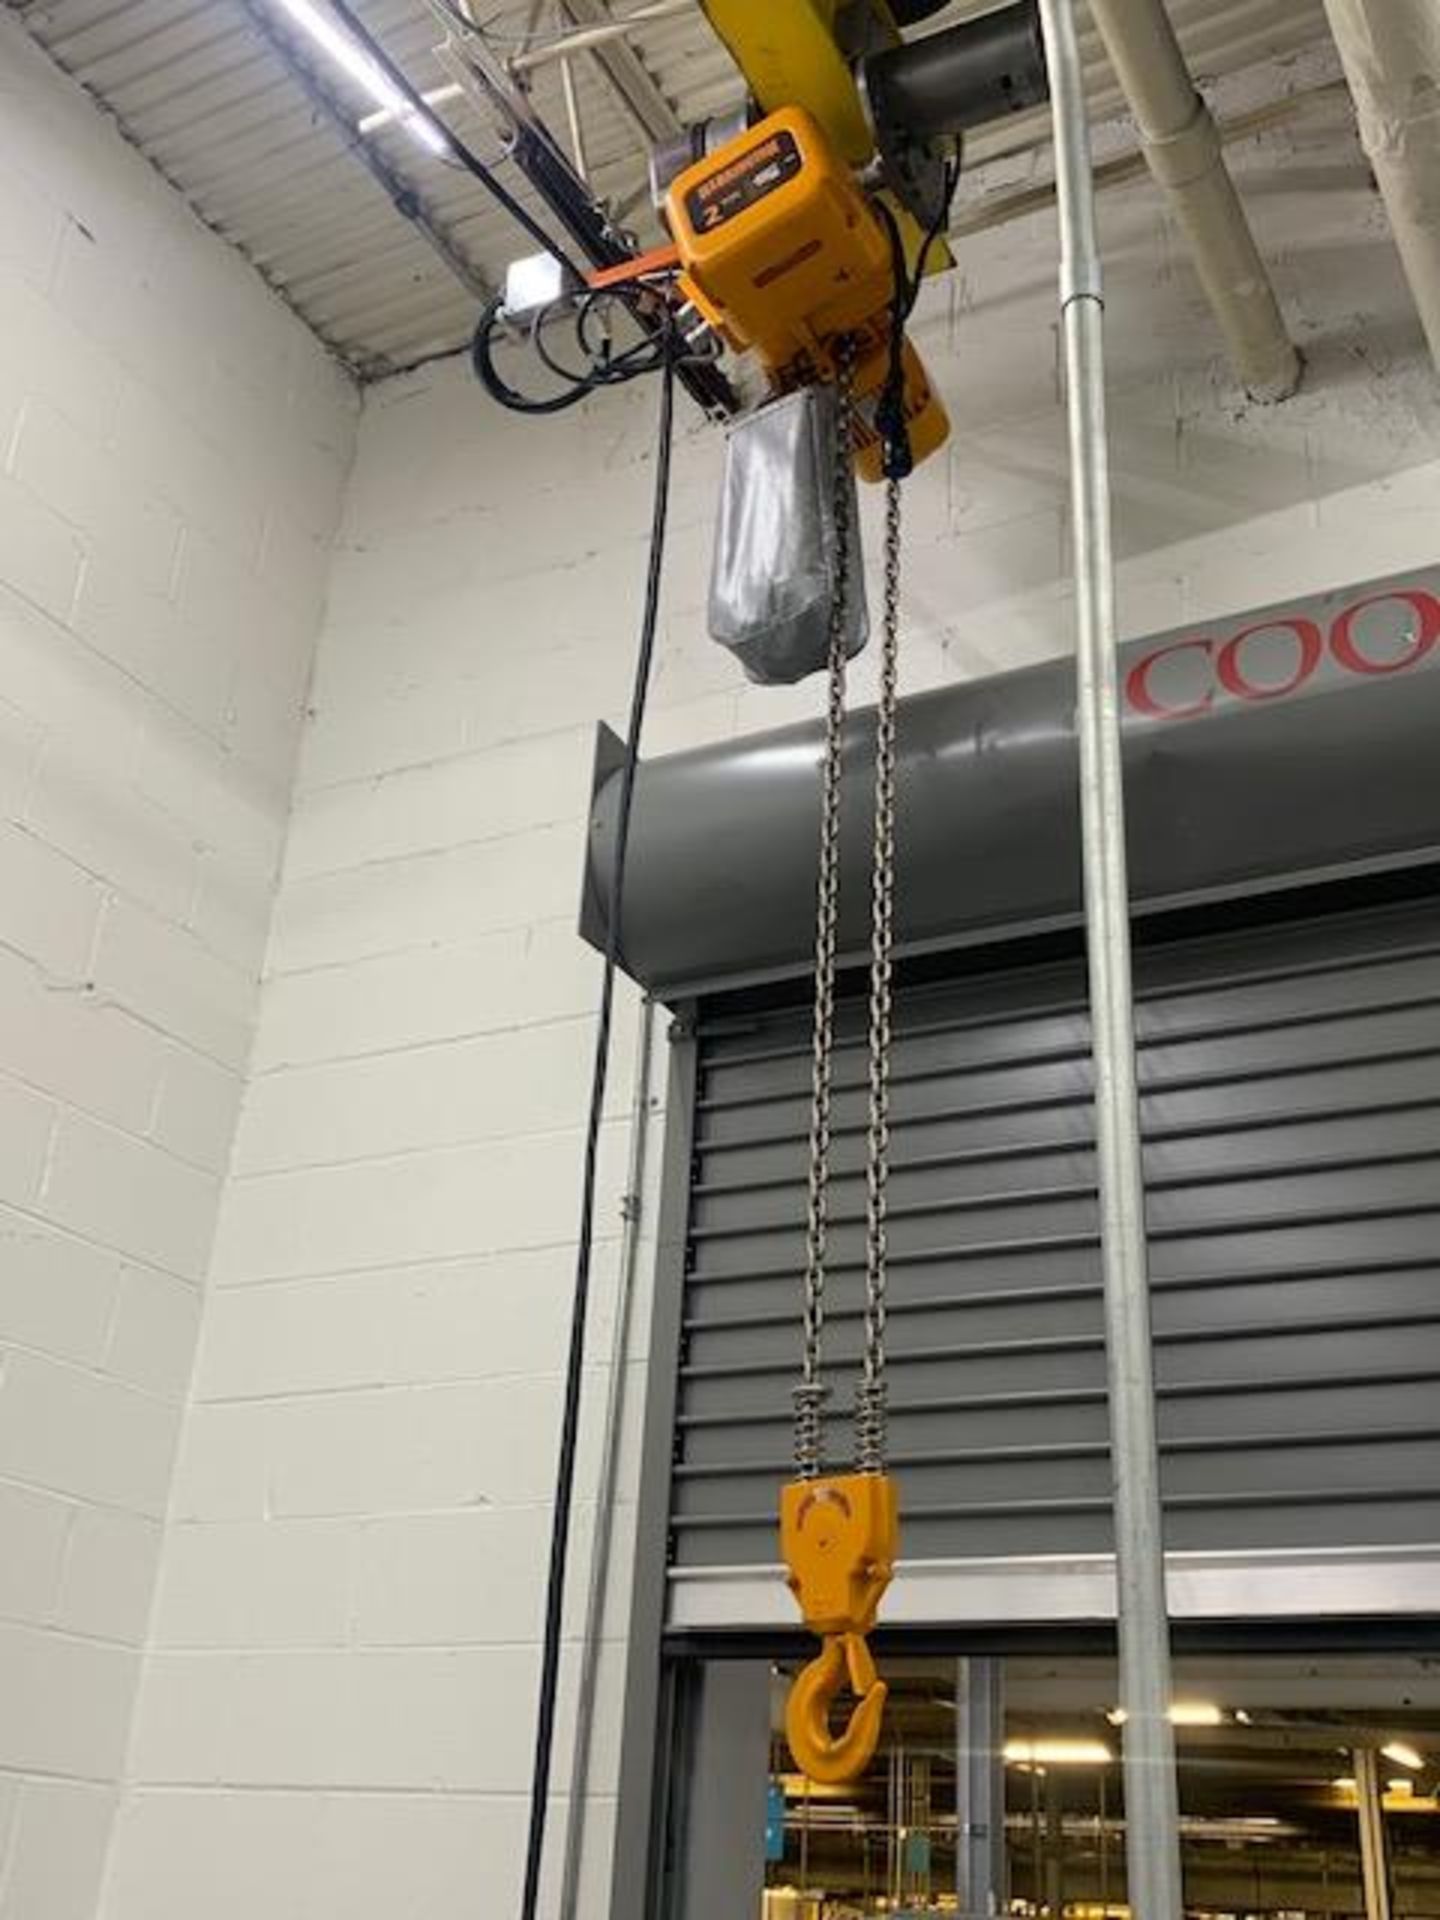 2 Ton Harrington Electric Chain Hoist w/ Power Trolley & Pendant, Mfg'd: 2019, LIKE NEW